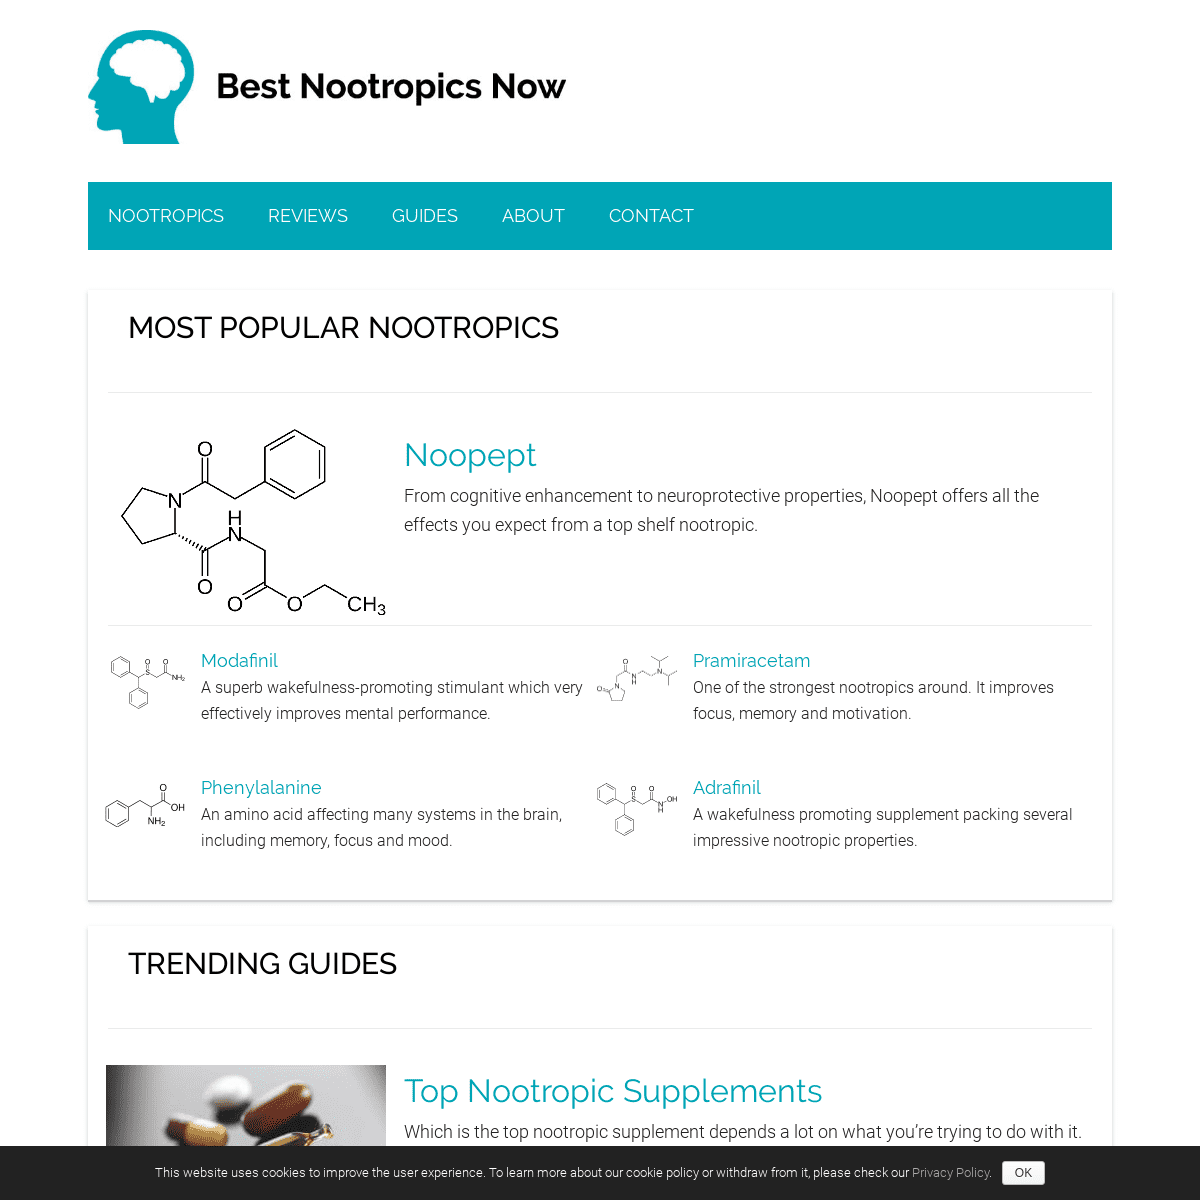 A complete backup of bestnootropicsnow.com